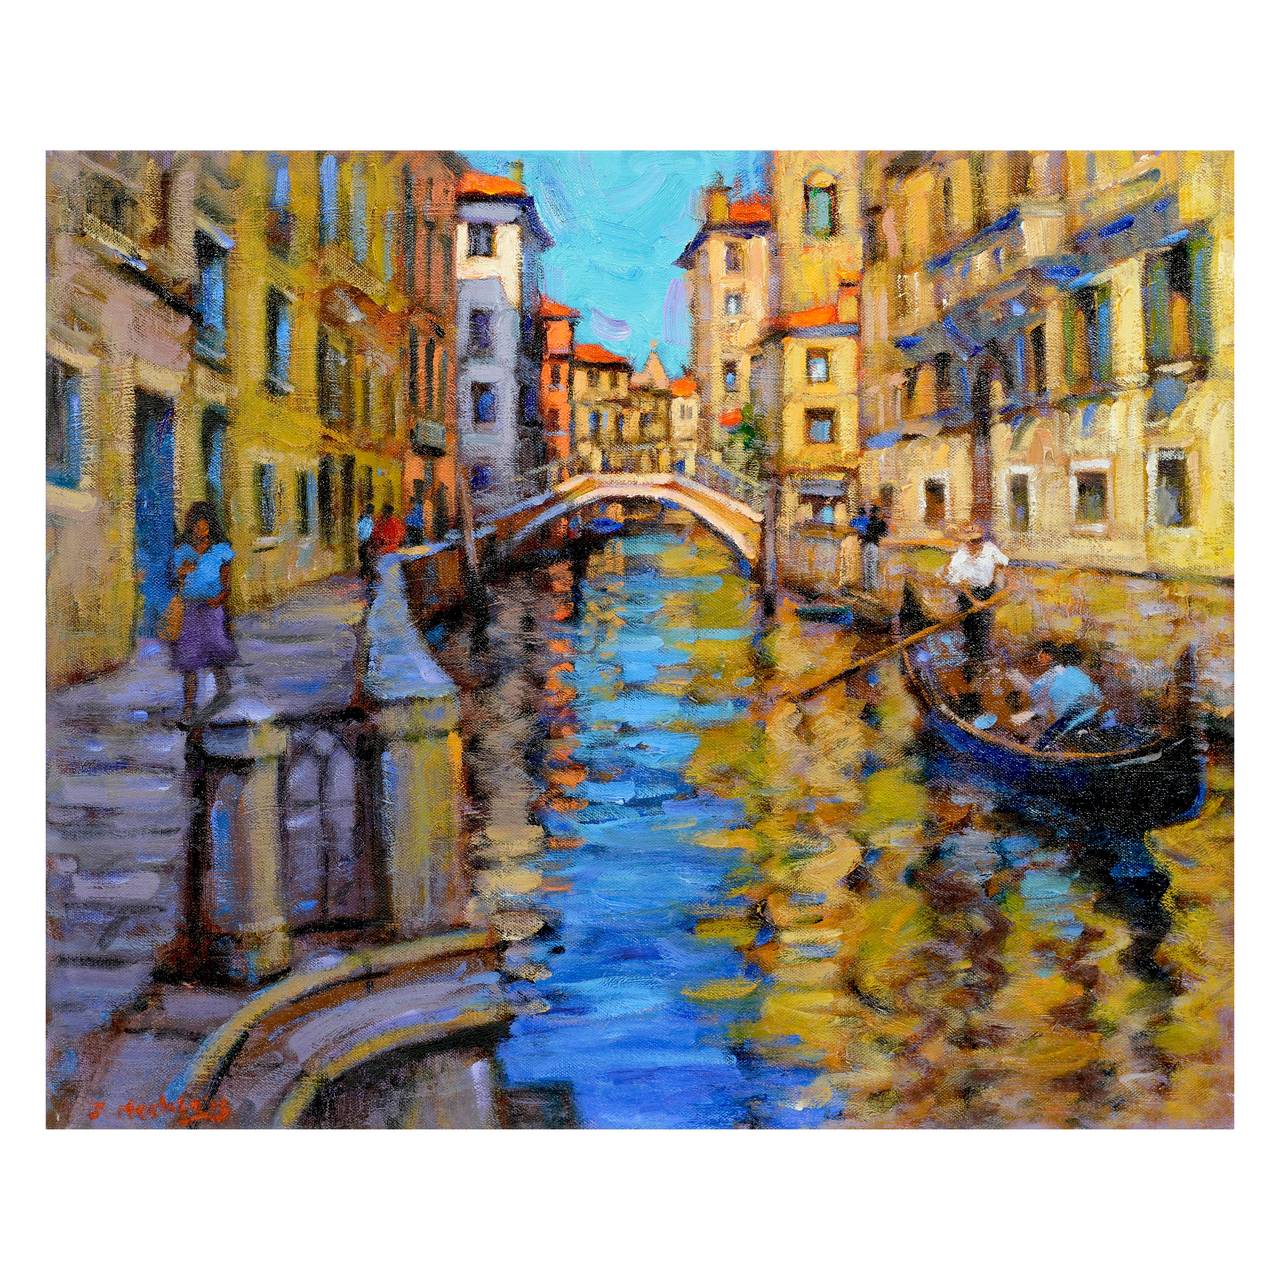 John Mackie (b.1955) Landscape Painting - “A Venetian Backwater”